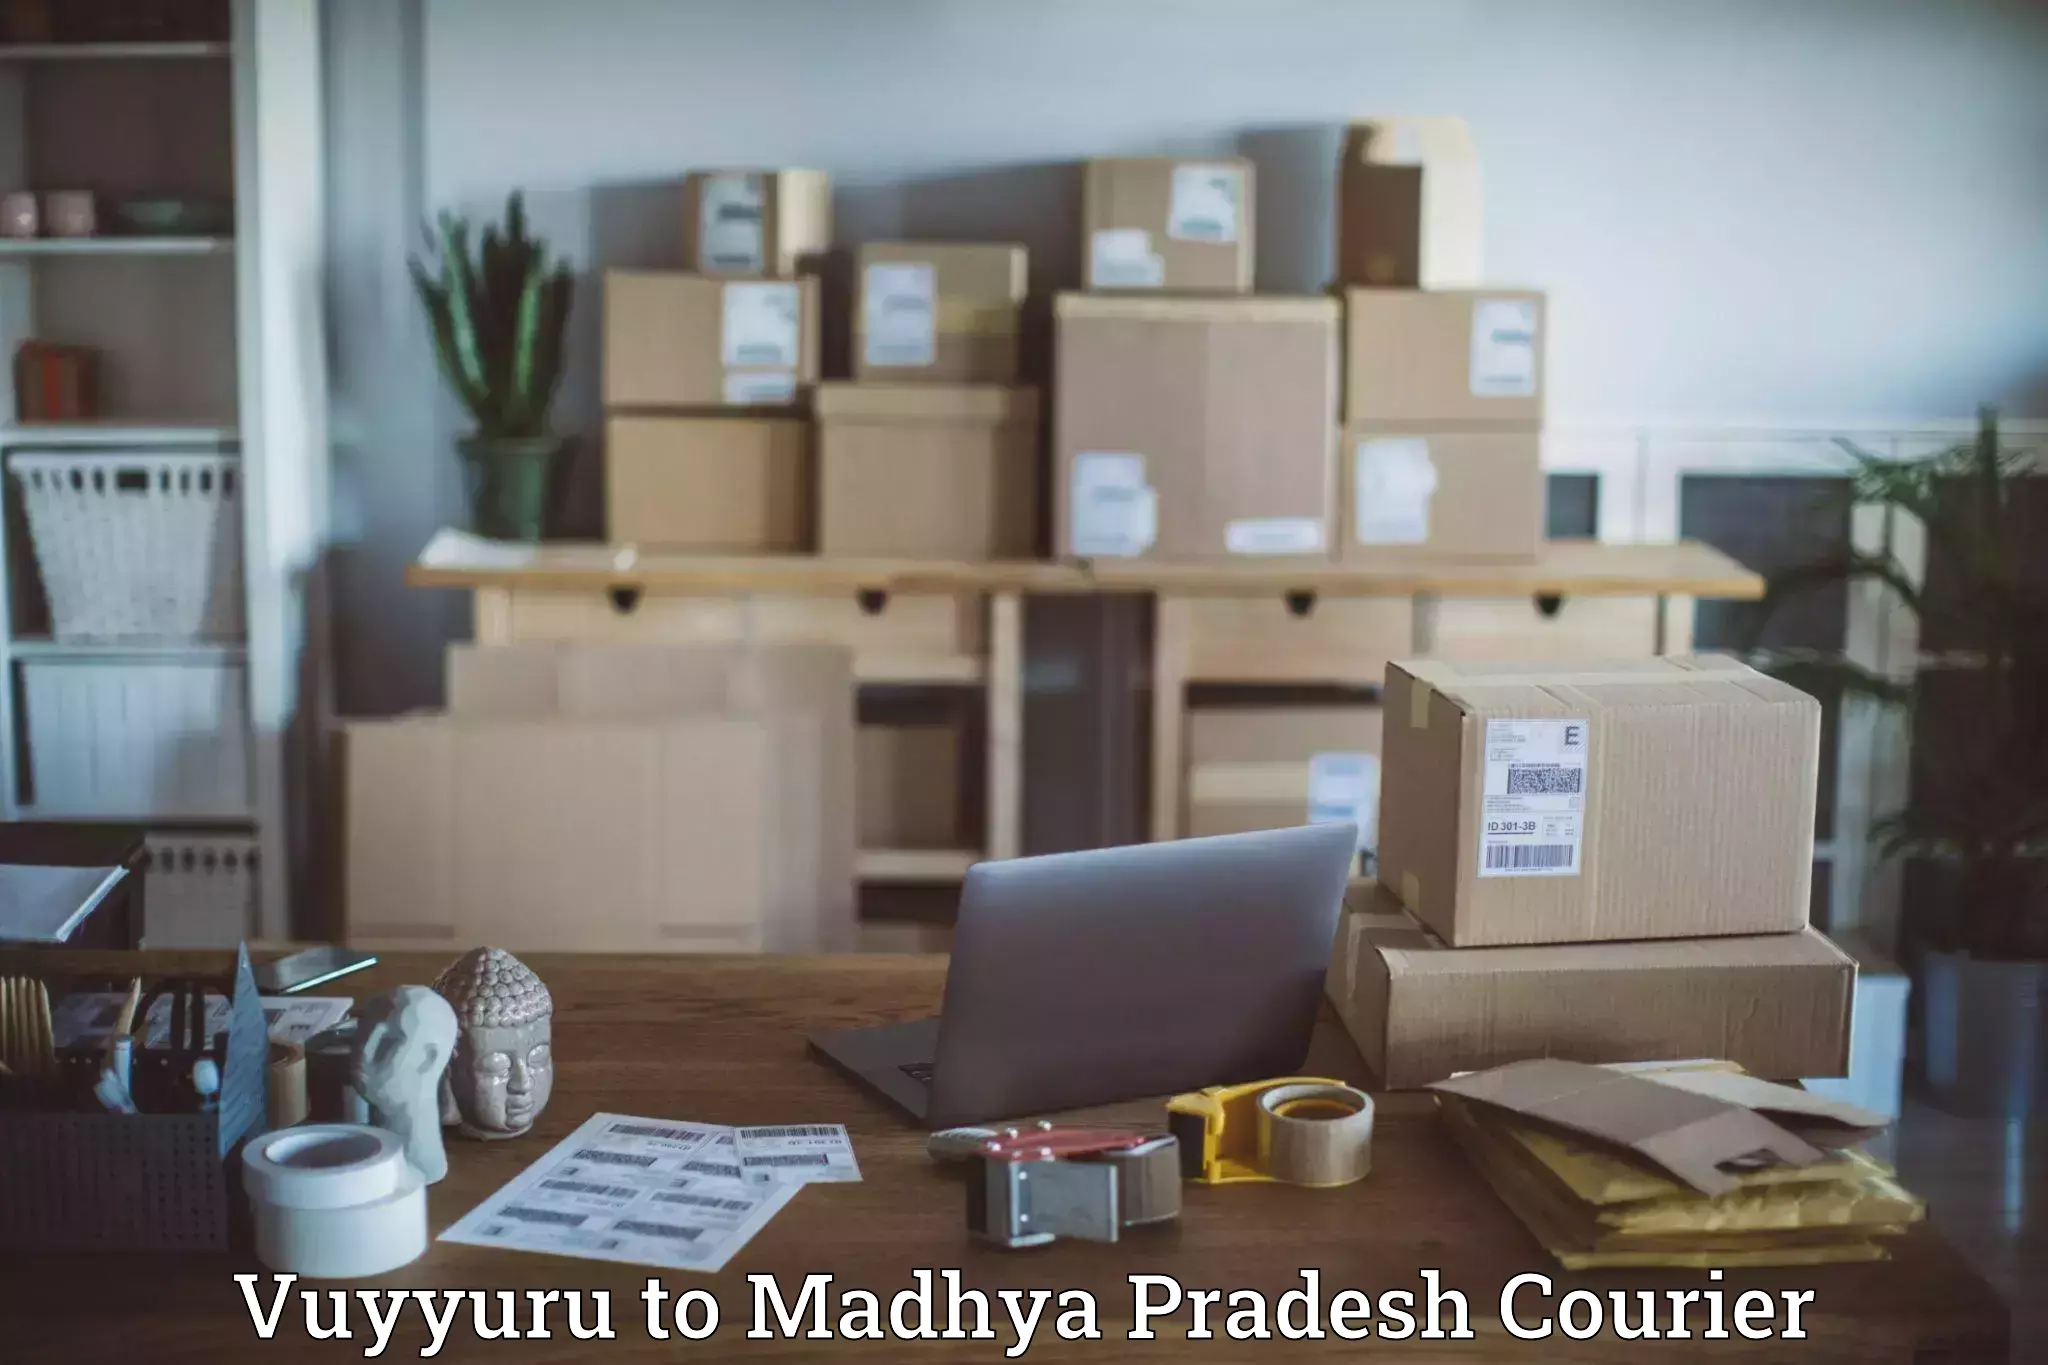 E-commerce shipping partnerships Vuyyuru to Madhya Pradesh